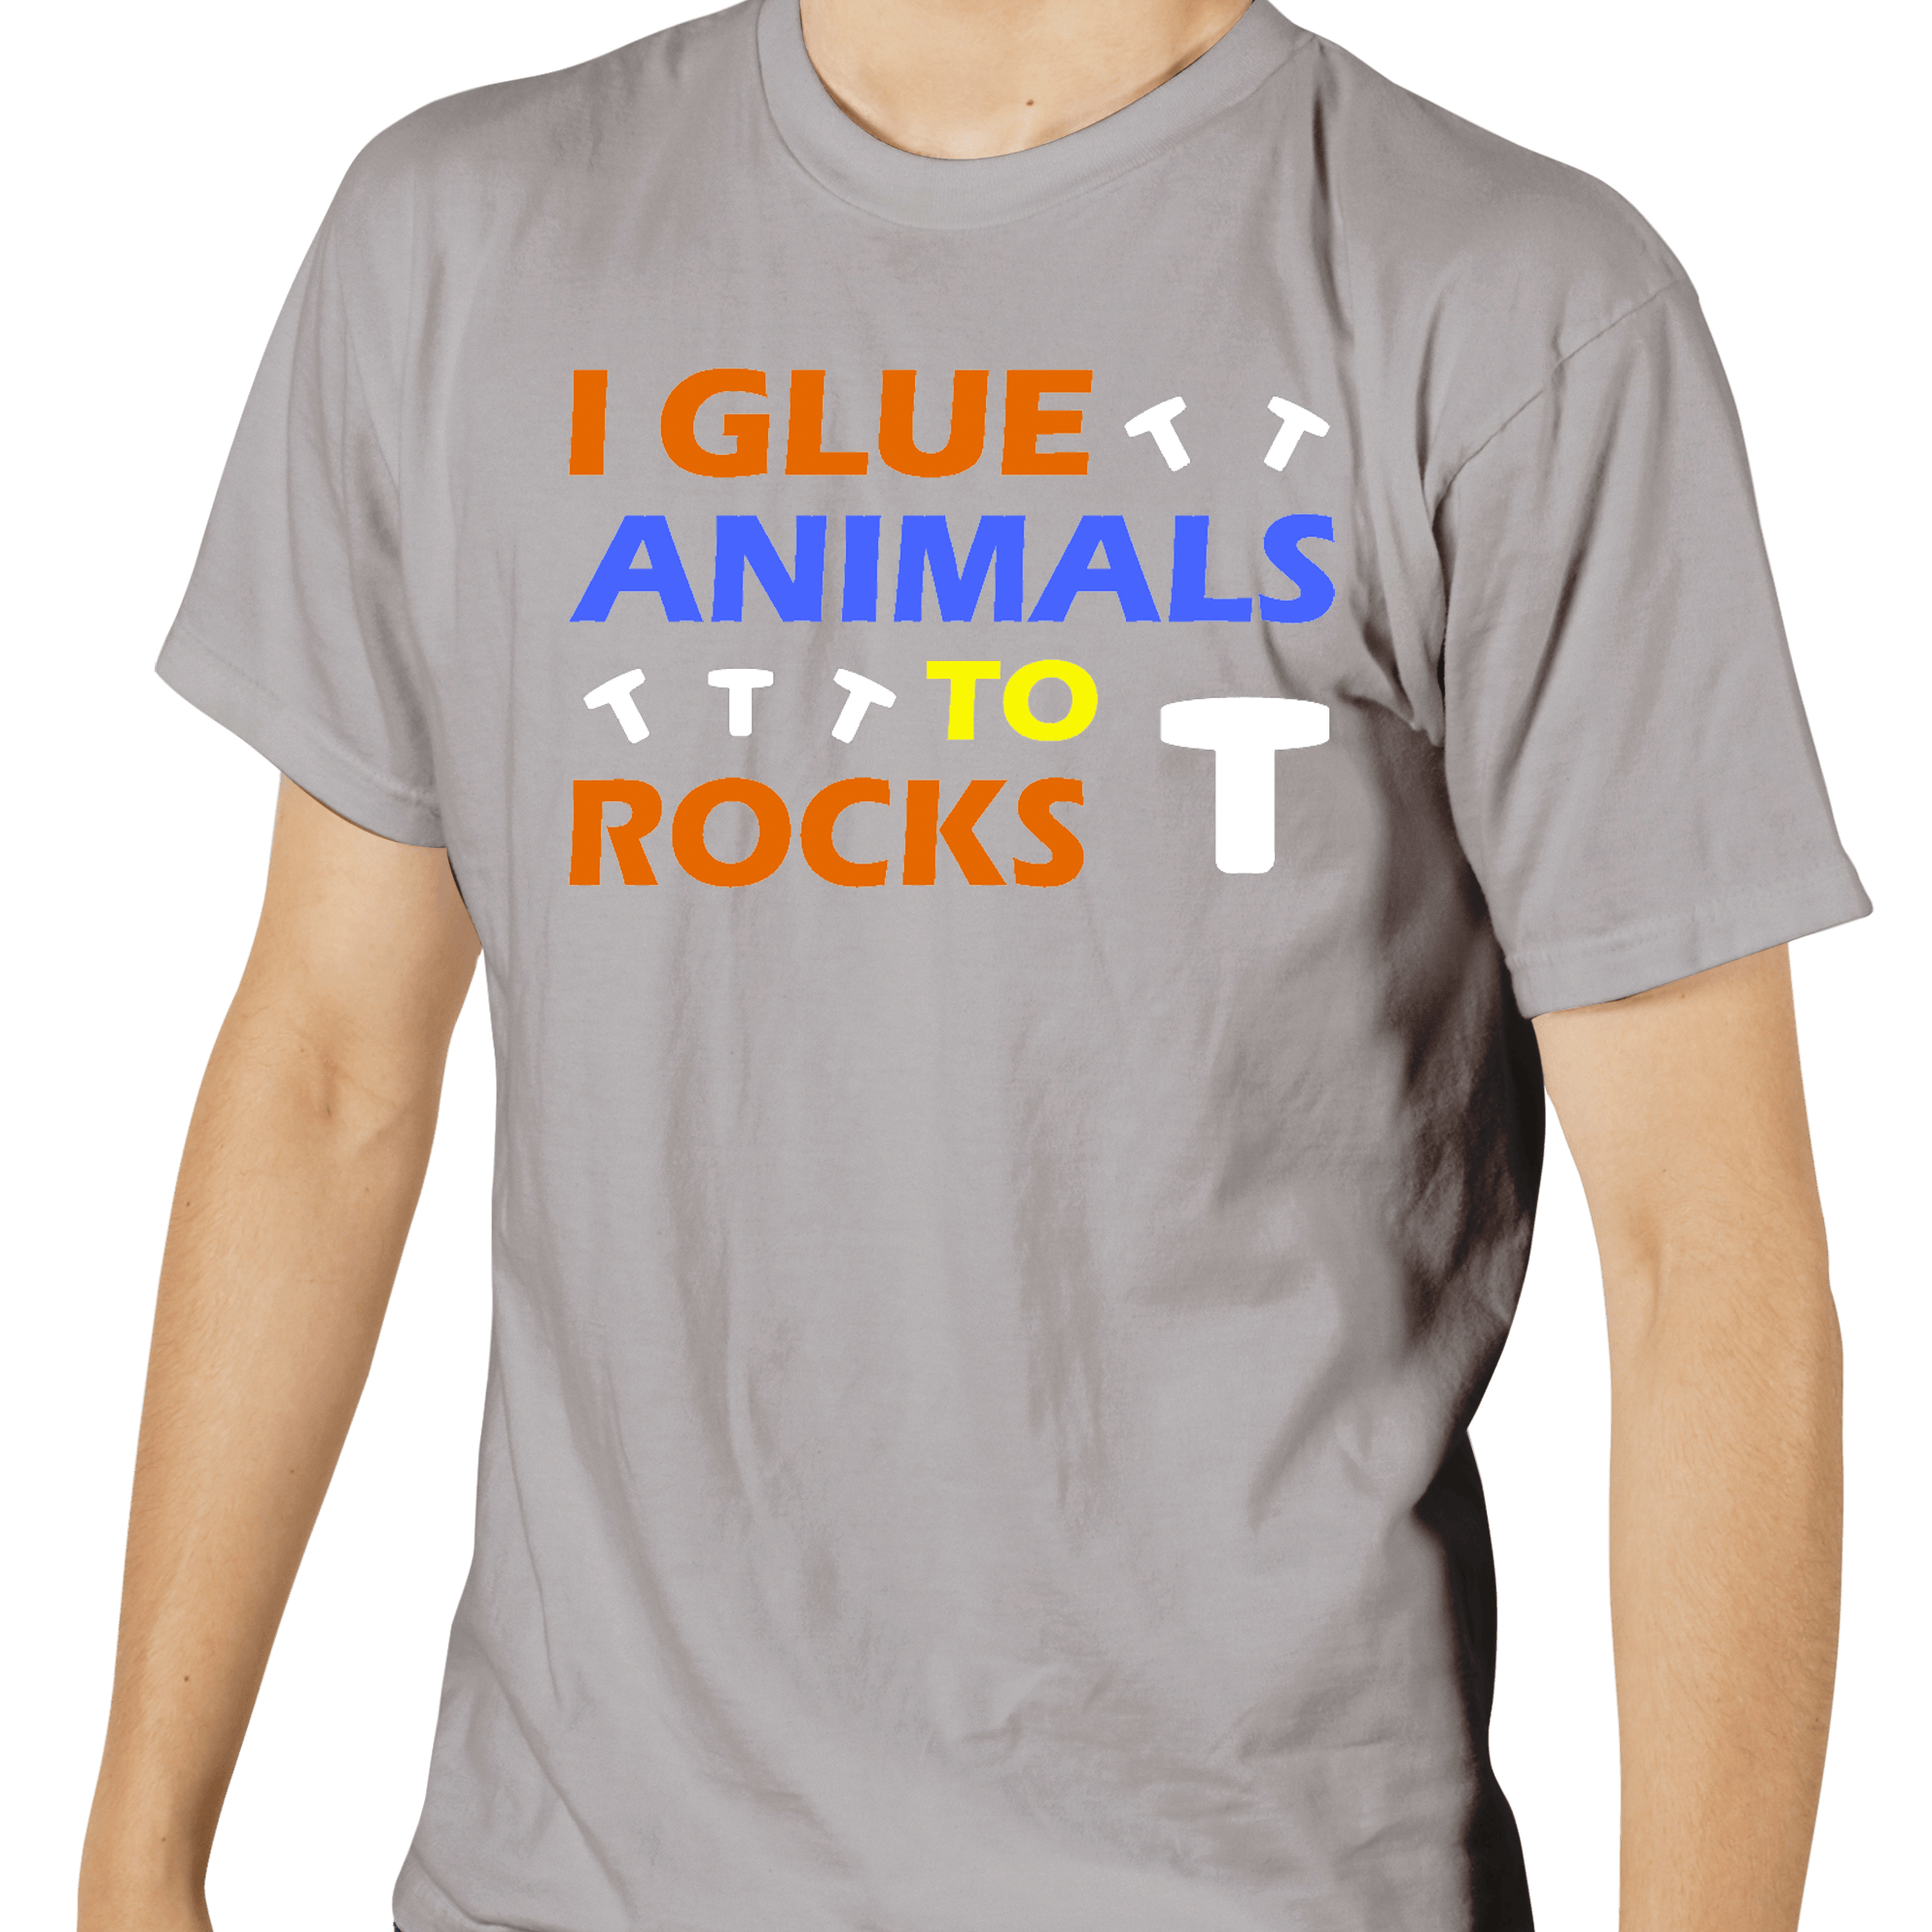 I Glue Animals To Rocks T-Shirt Grey - SaltCritters